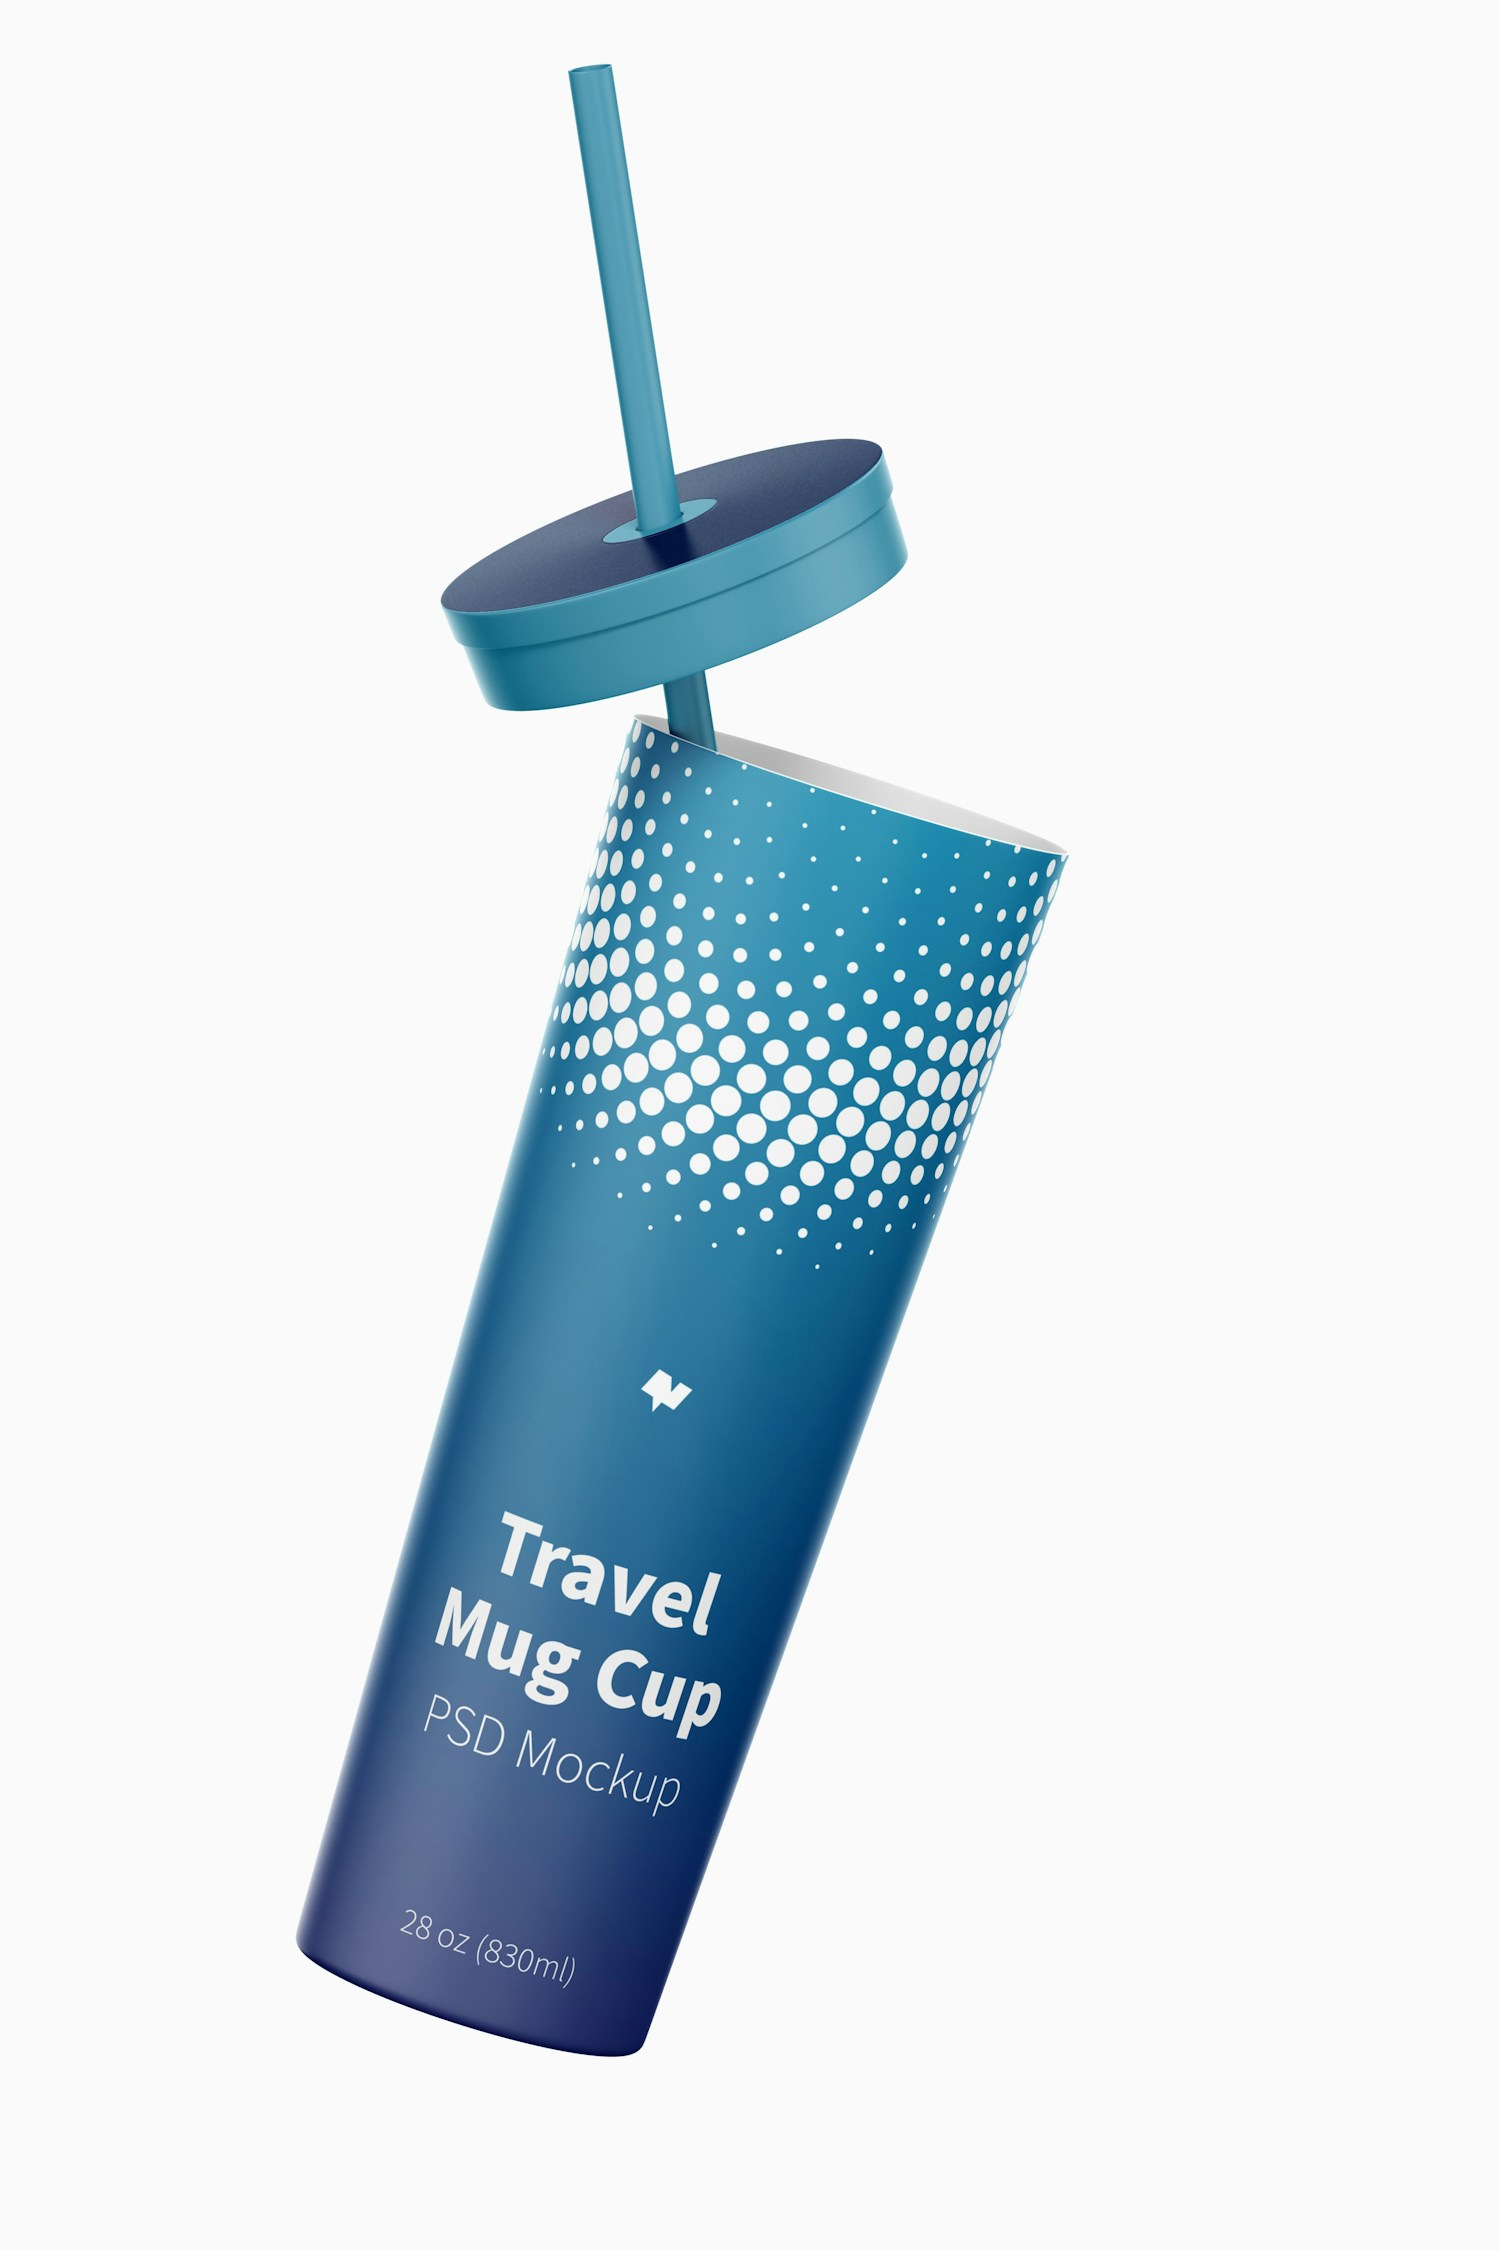 Travel Mug Cup Mockup, Falling